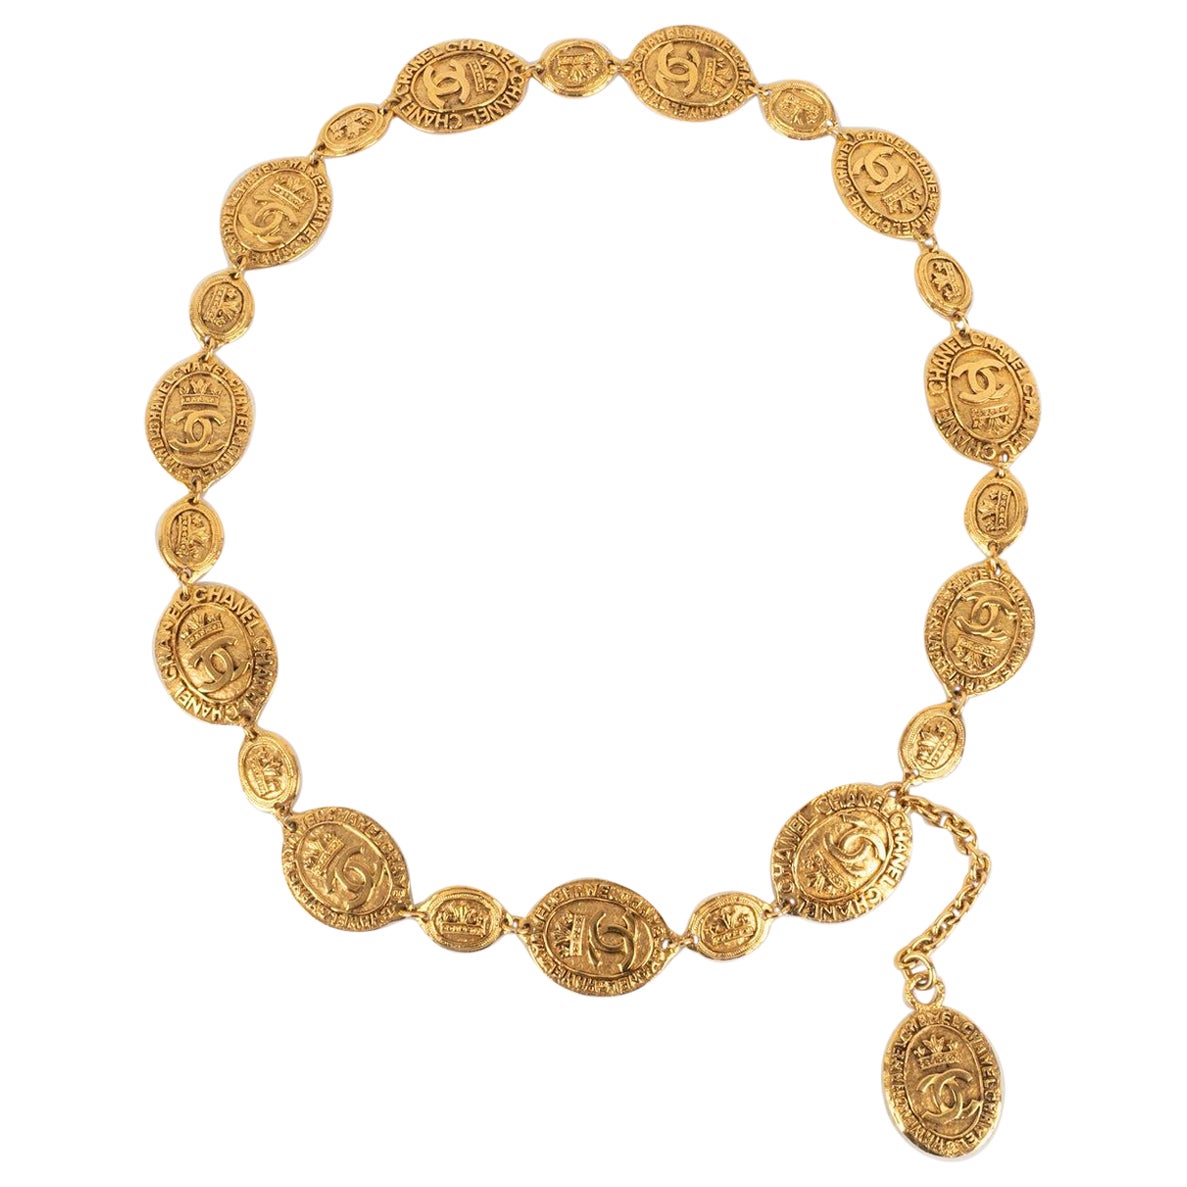 Chanel Golden Metal Belt with Engraved Medallions, 1980s